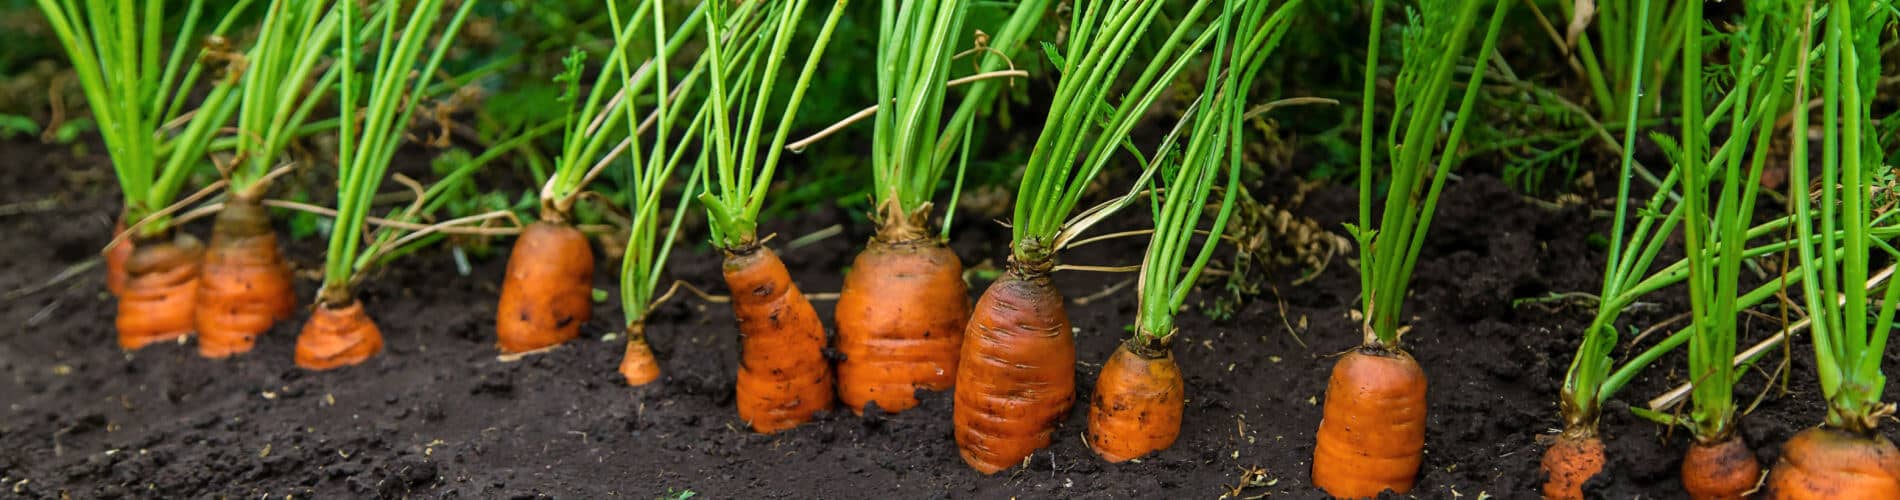 Karotten selber anbauen